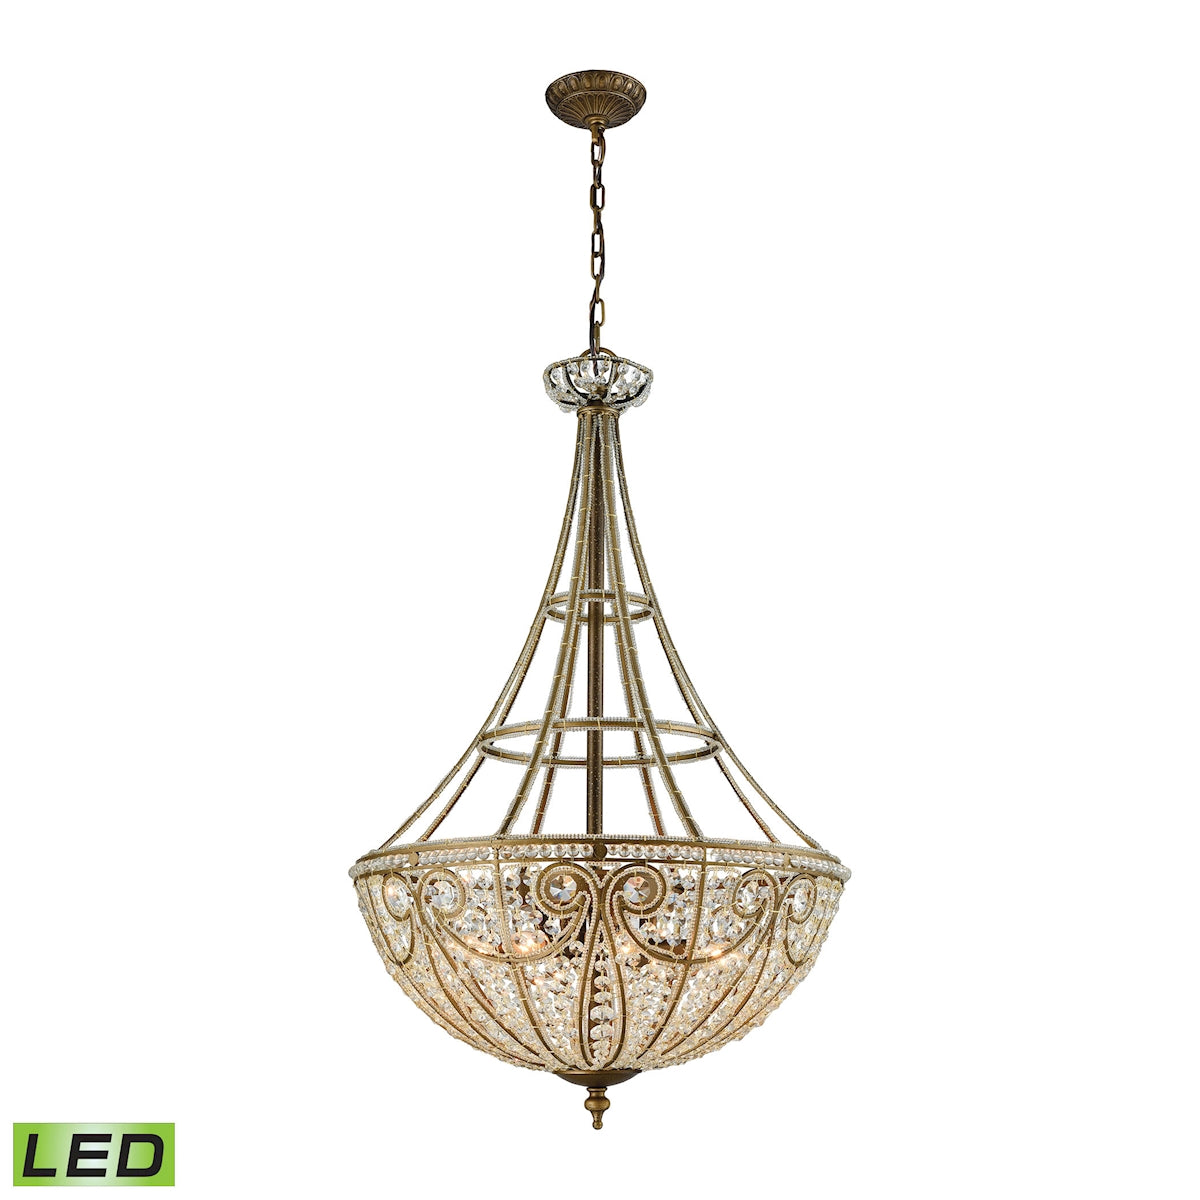 ELK Lighting 15966/8-LED Elizabethan 8-Light Chandelier in Dark Bronze with Clear Crystal - Includes LED Bulbs